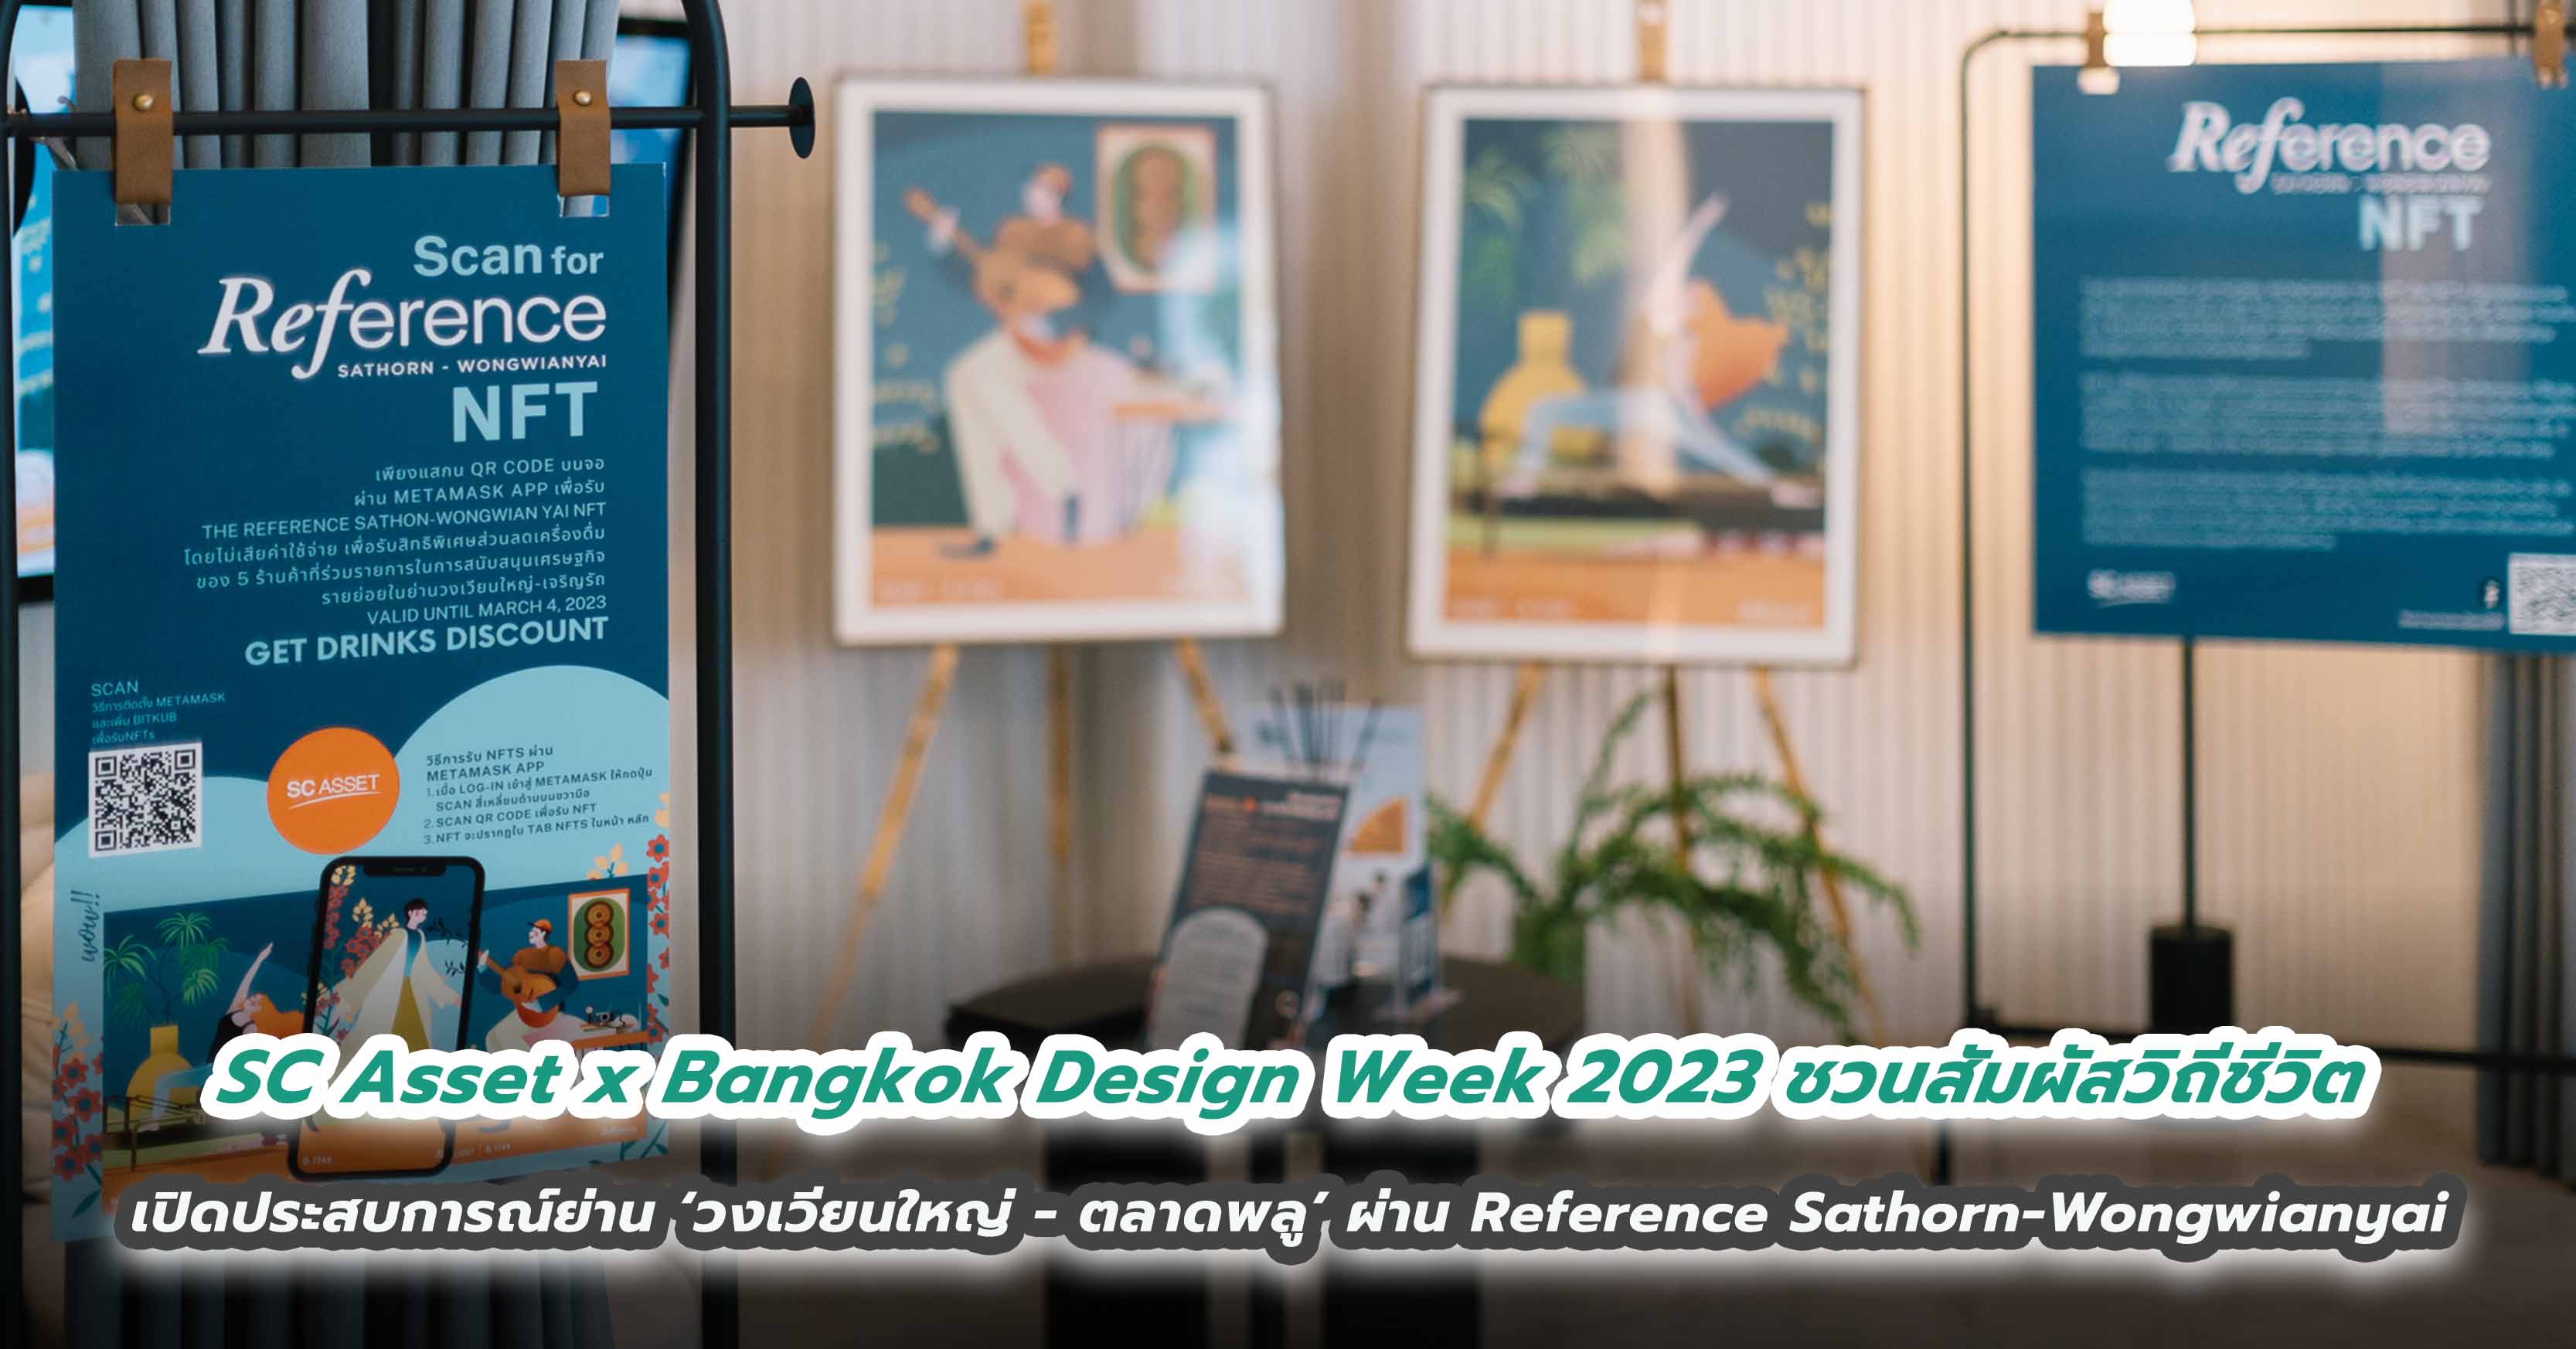 SC Asset x Bangkok Design Week 2023 ชวนสัมผัสวิถีชีวิต เปิดประสบการณ์ในย่าน ‘วงเวียนใหญ่ – ตลาดพลู’ ผ่าน Reference Sathorn-Wongwianyai